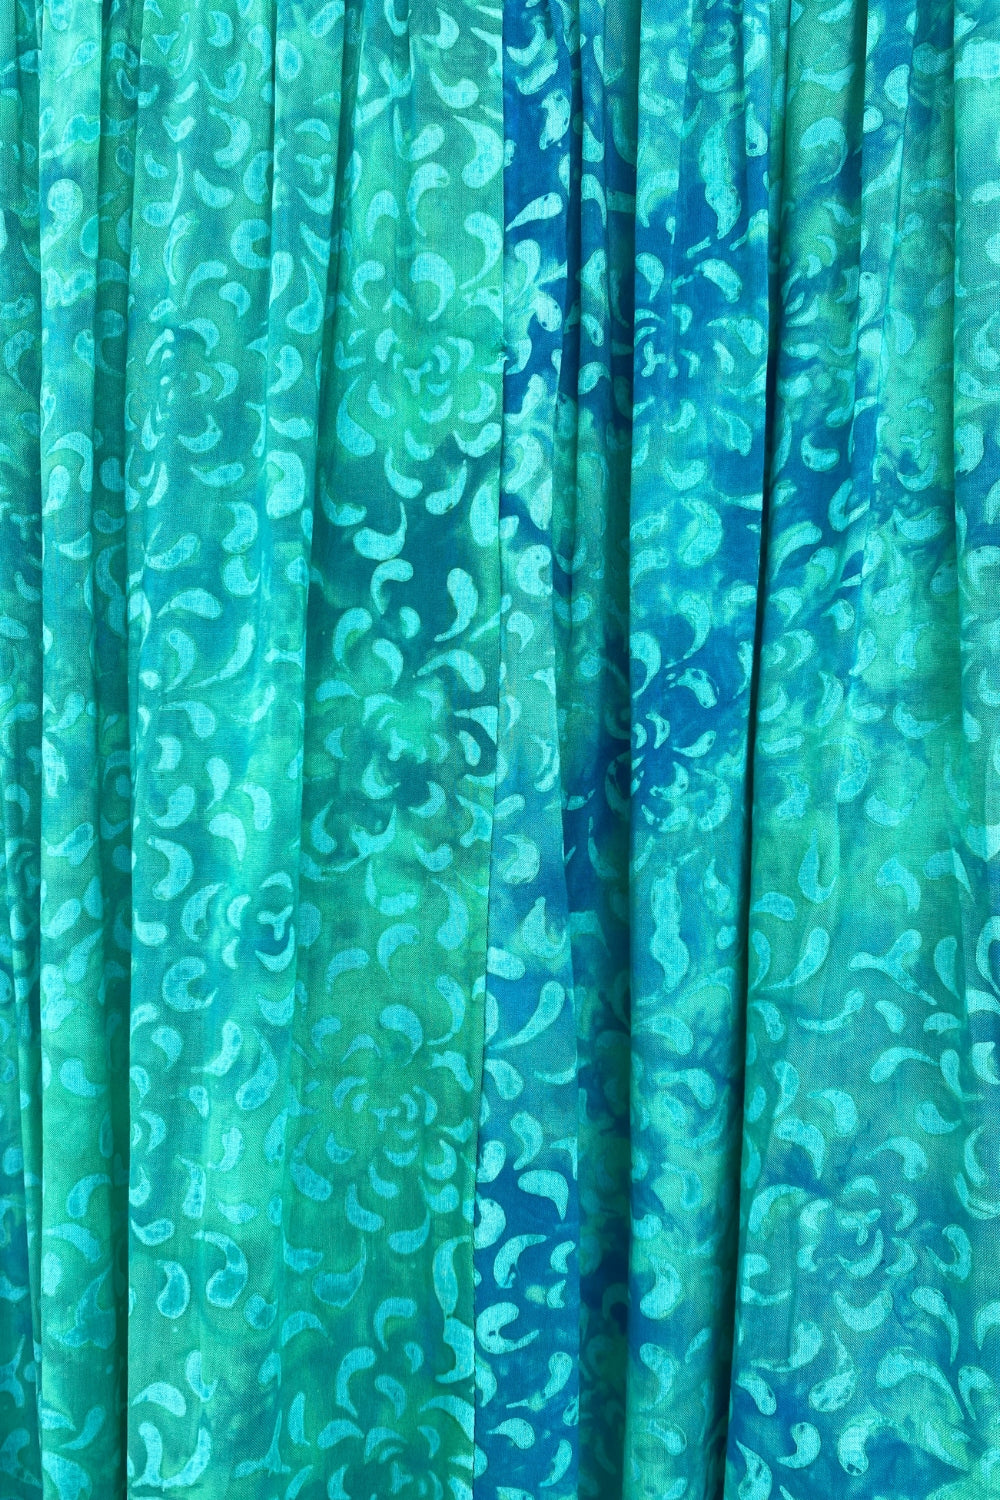 The Elizabeth Maxi Skirt - The Turquoise Sea